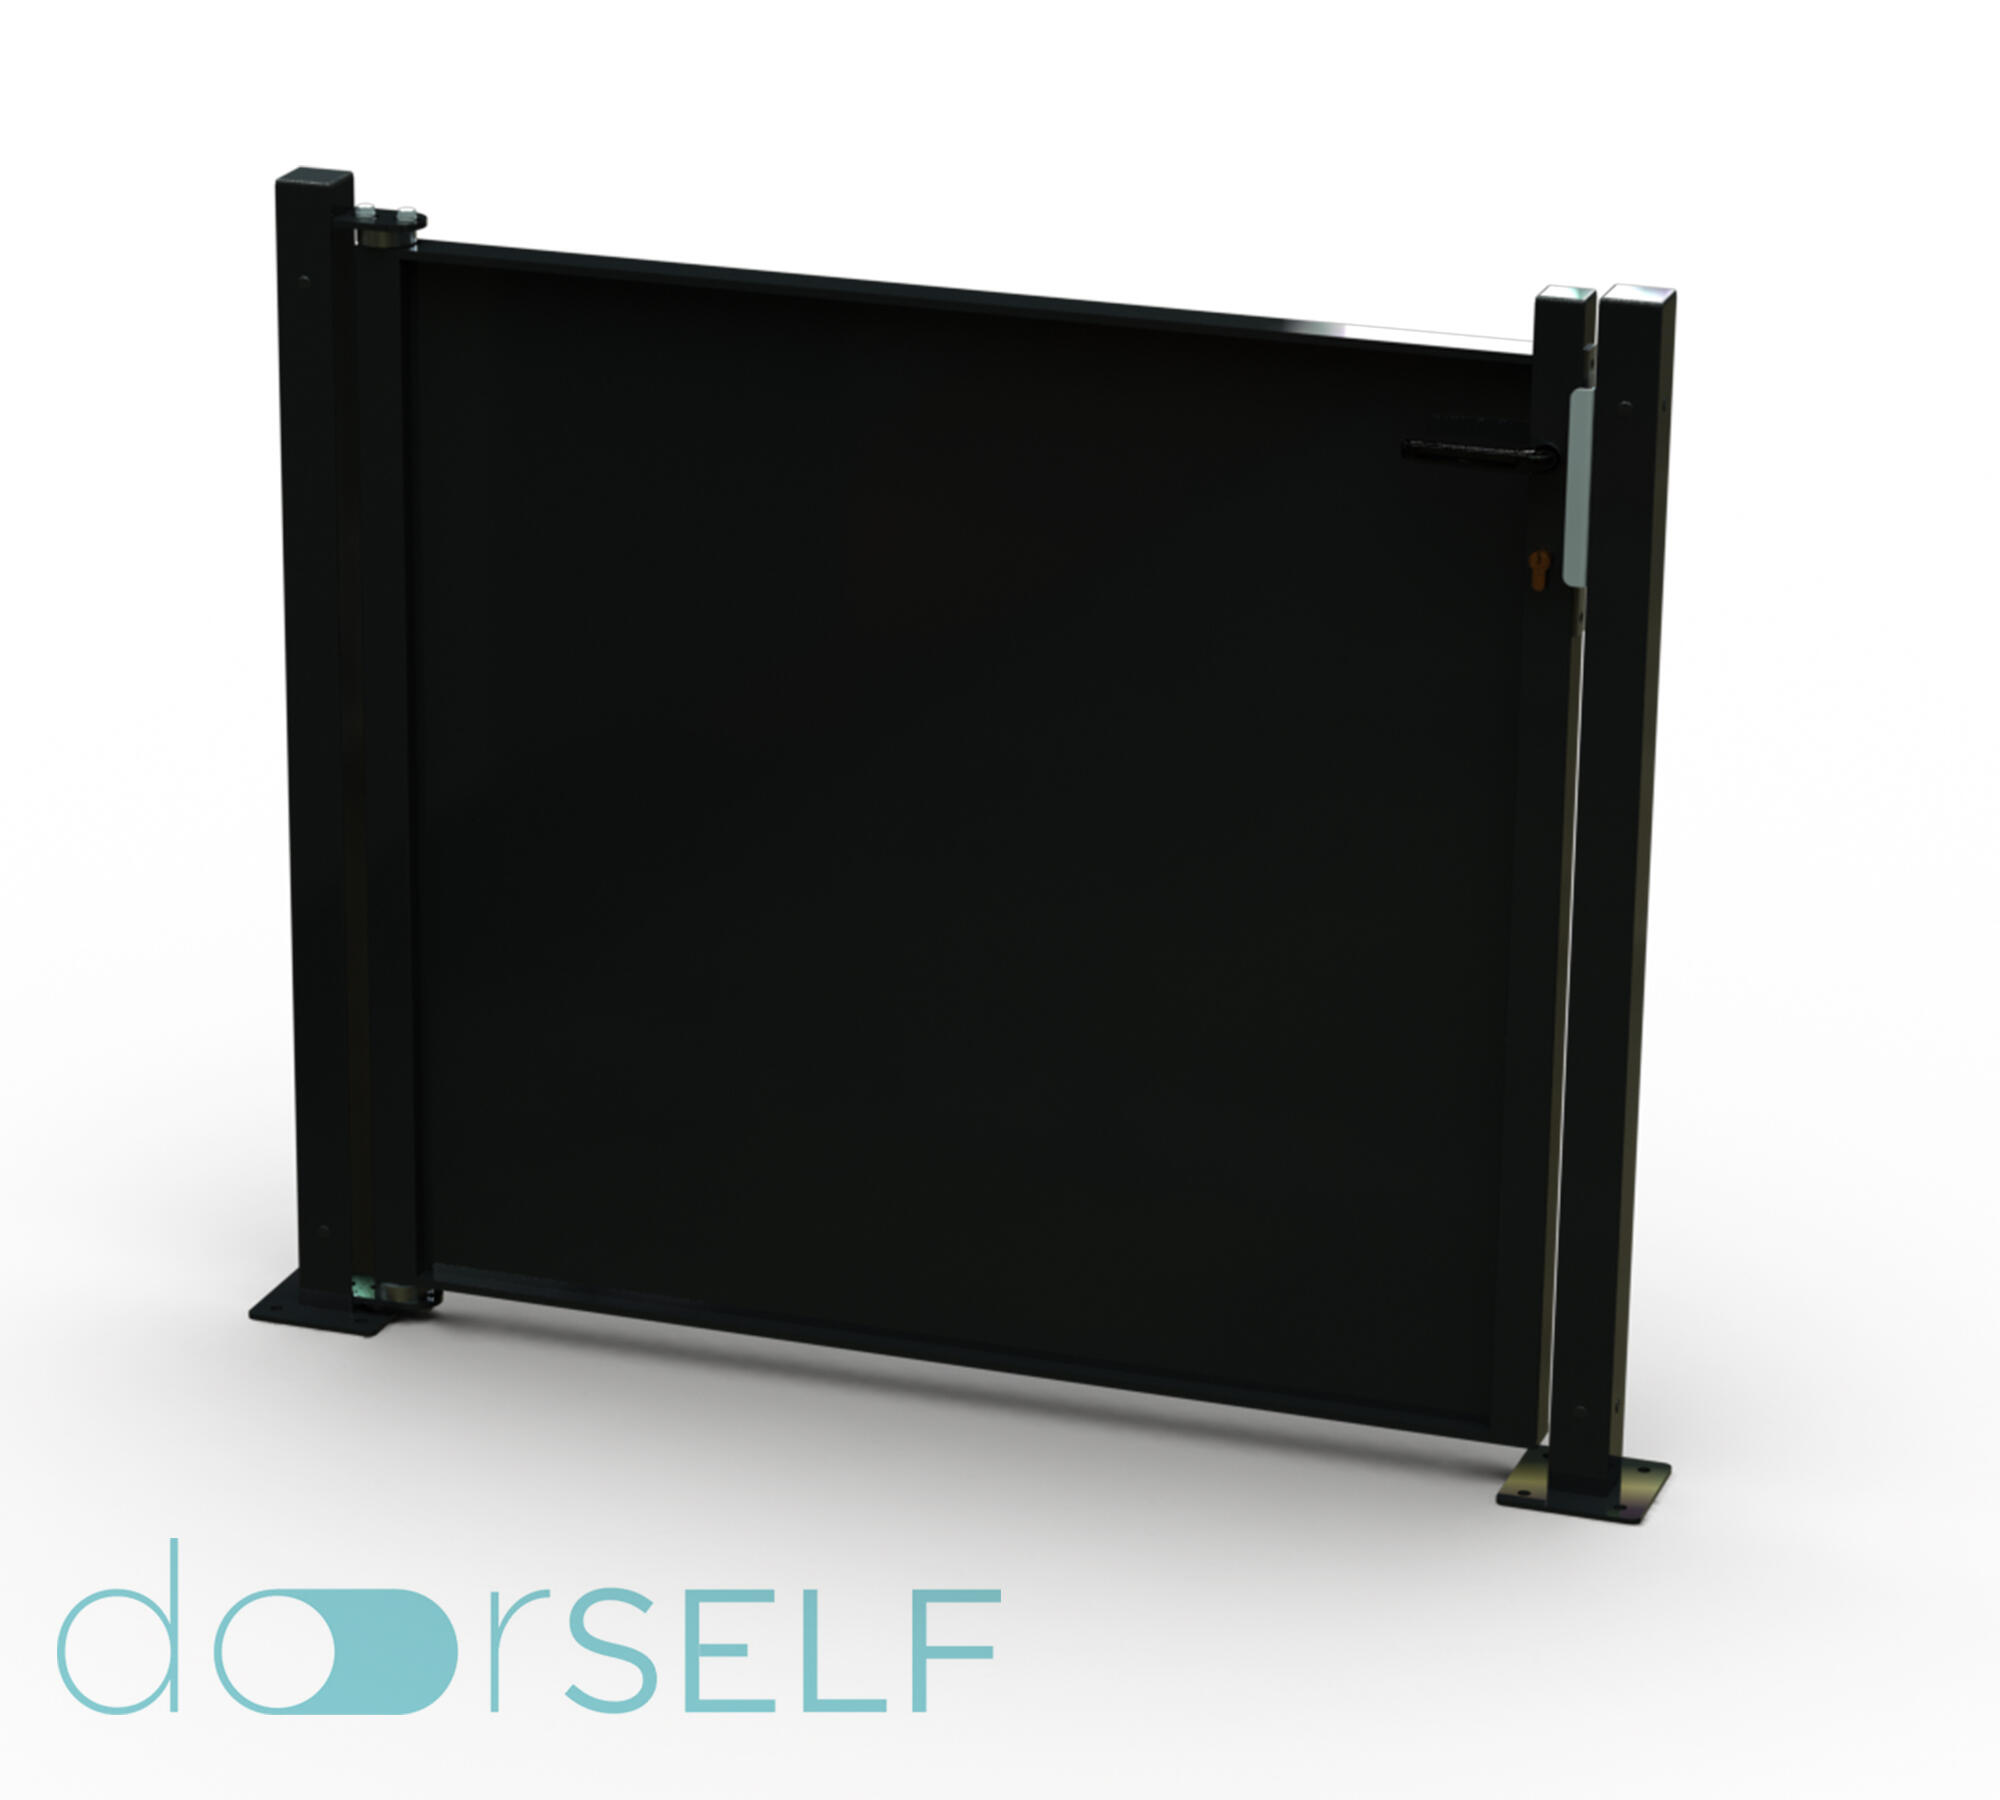 Kit puerta para valla doorself blind negro 116x93,5 cm